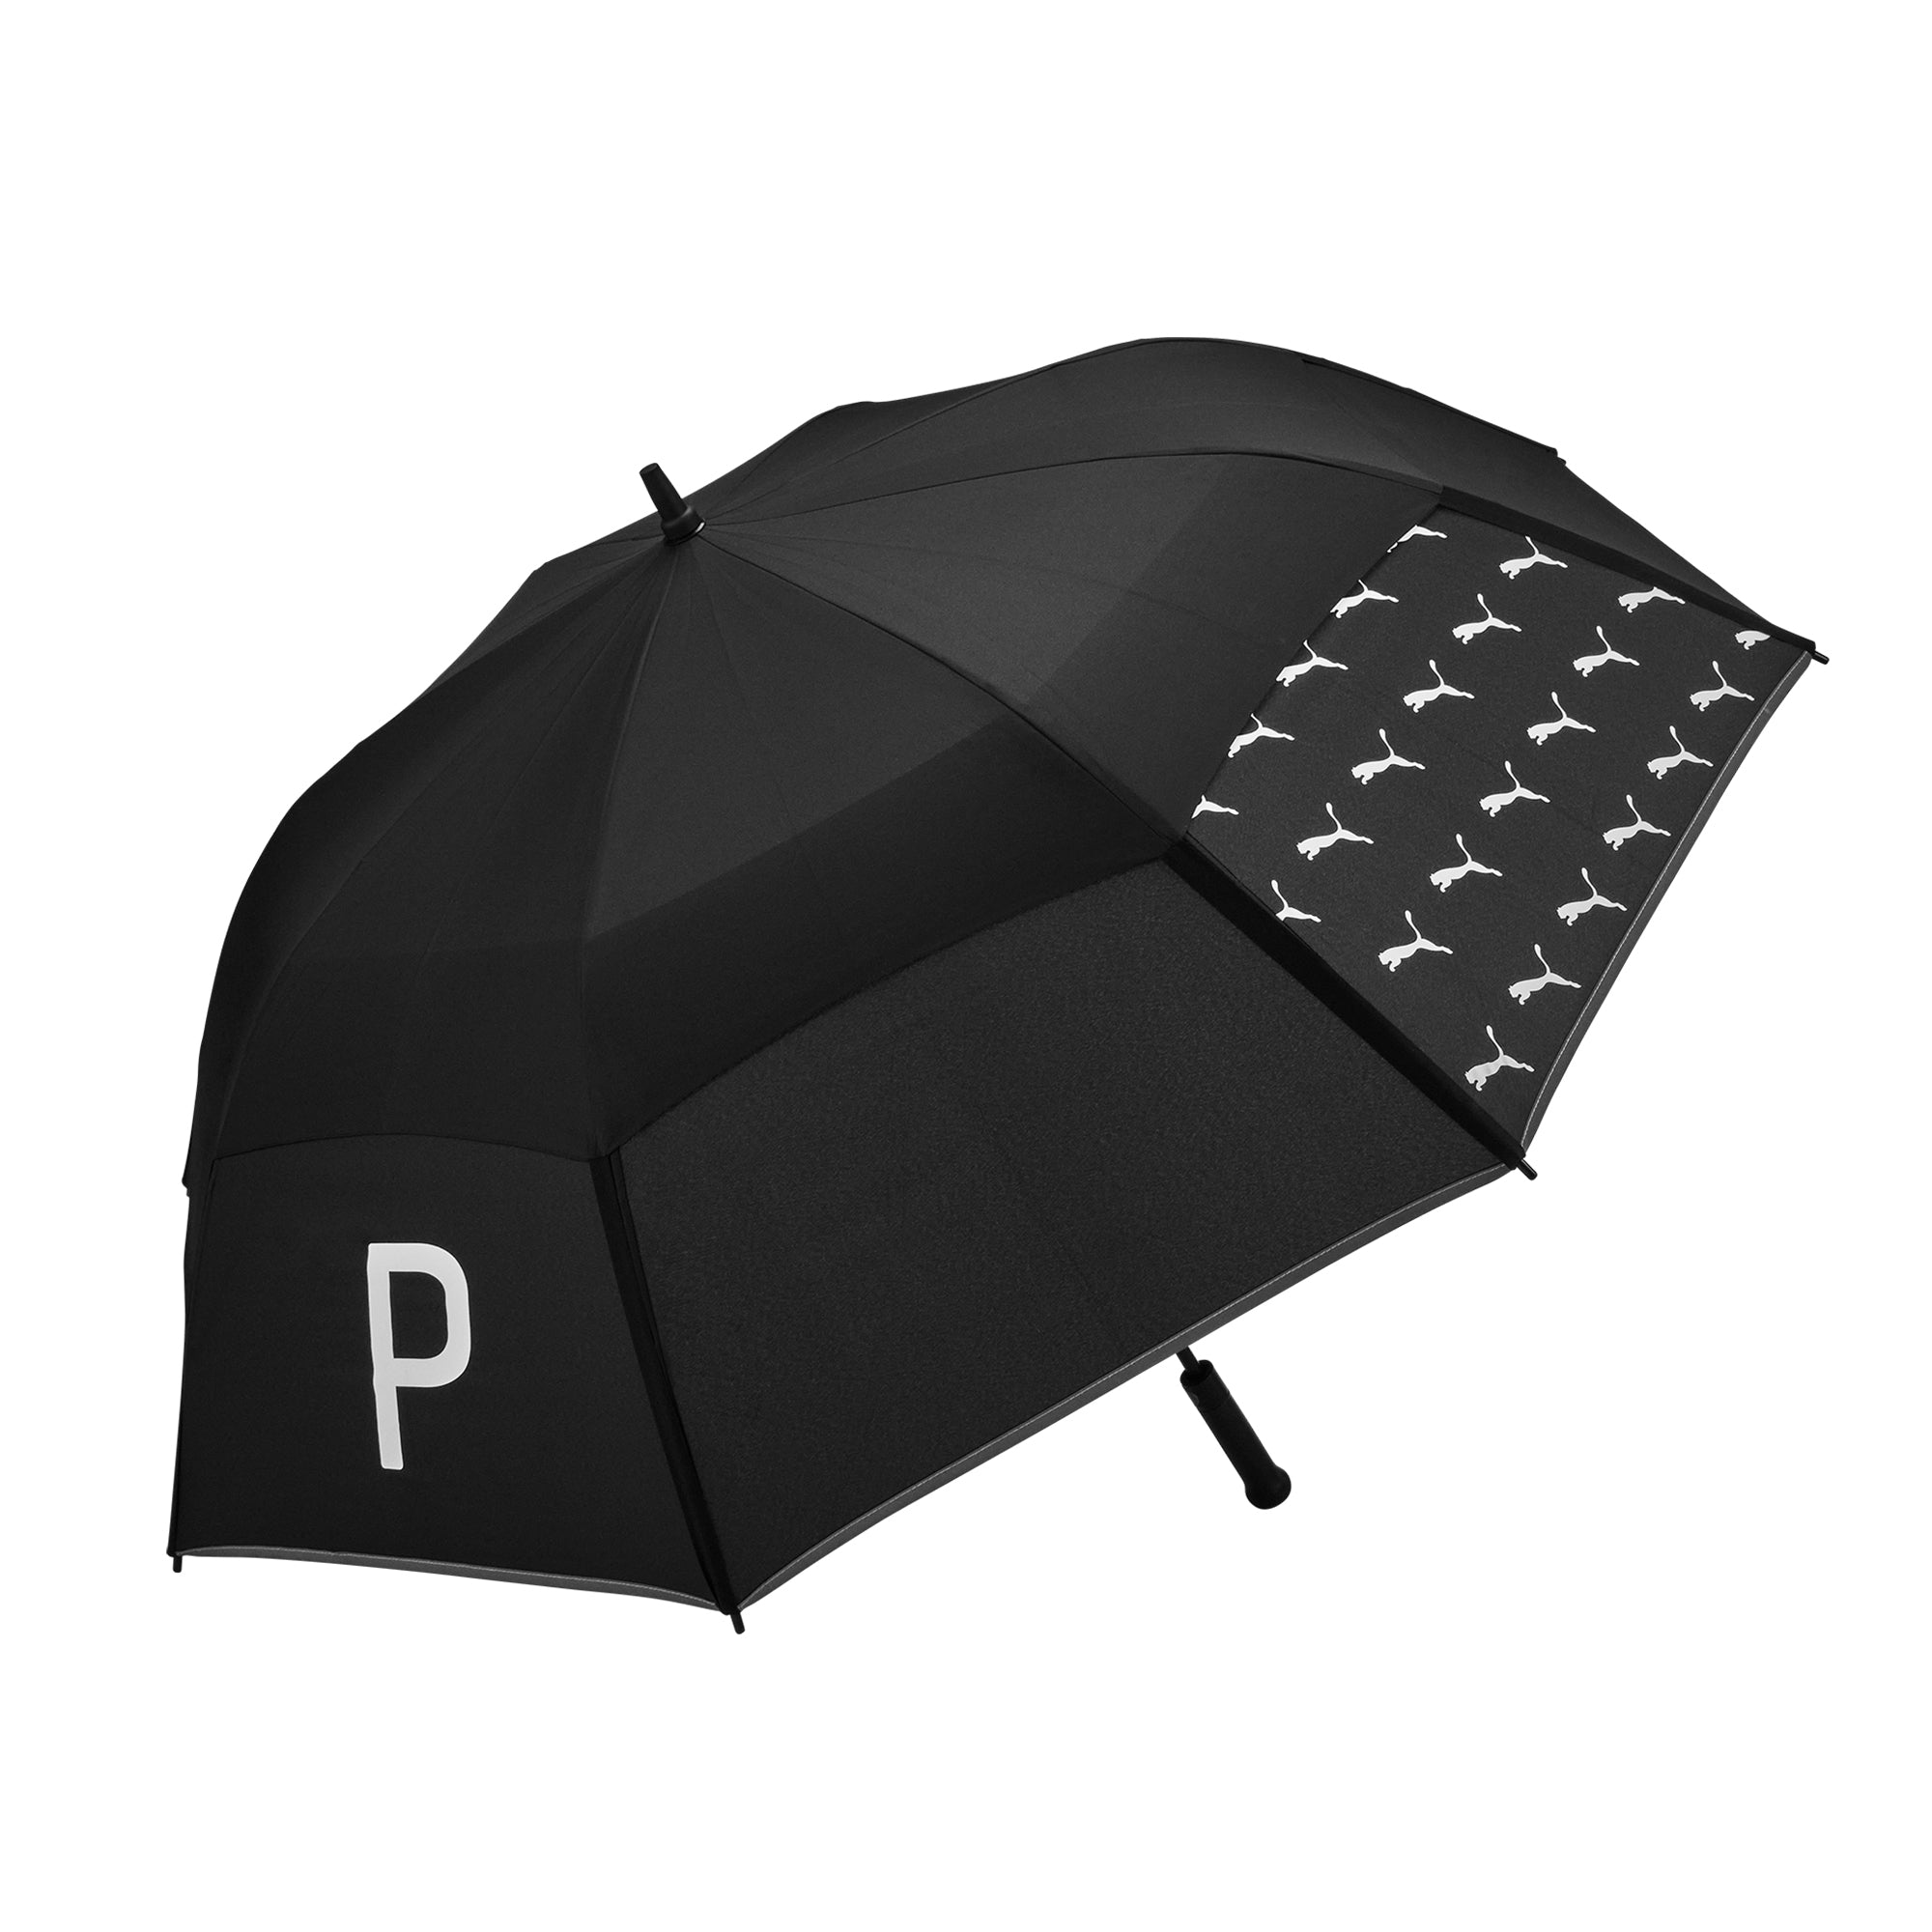 puma-golf-double-canopy-umbrella-054339-puma-black-bright-white-01